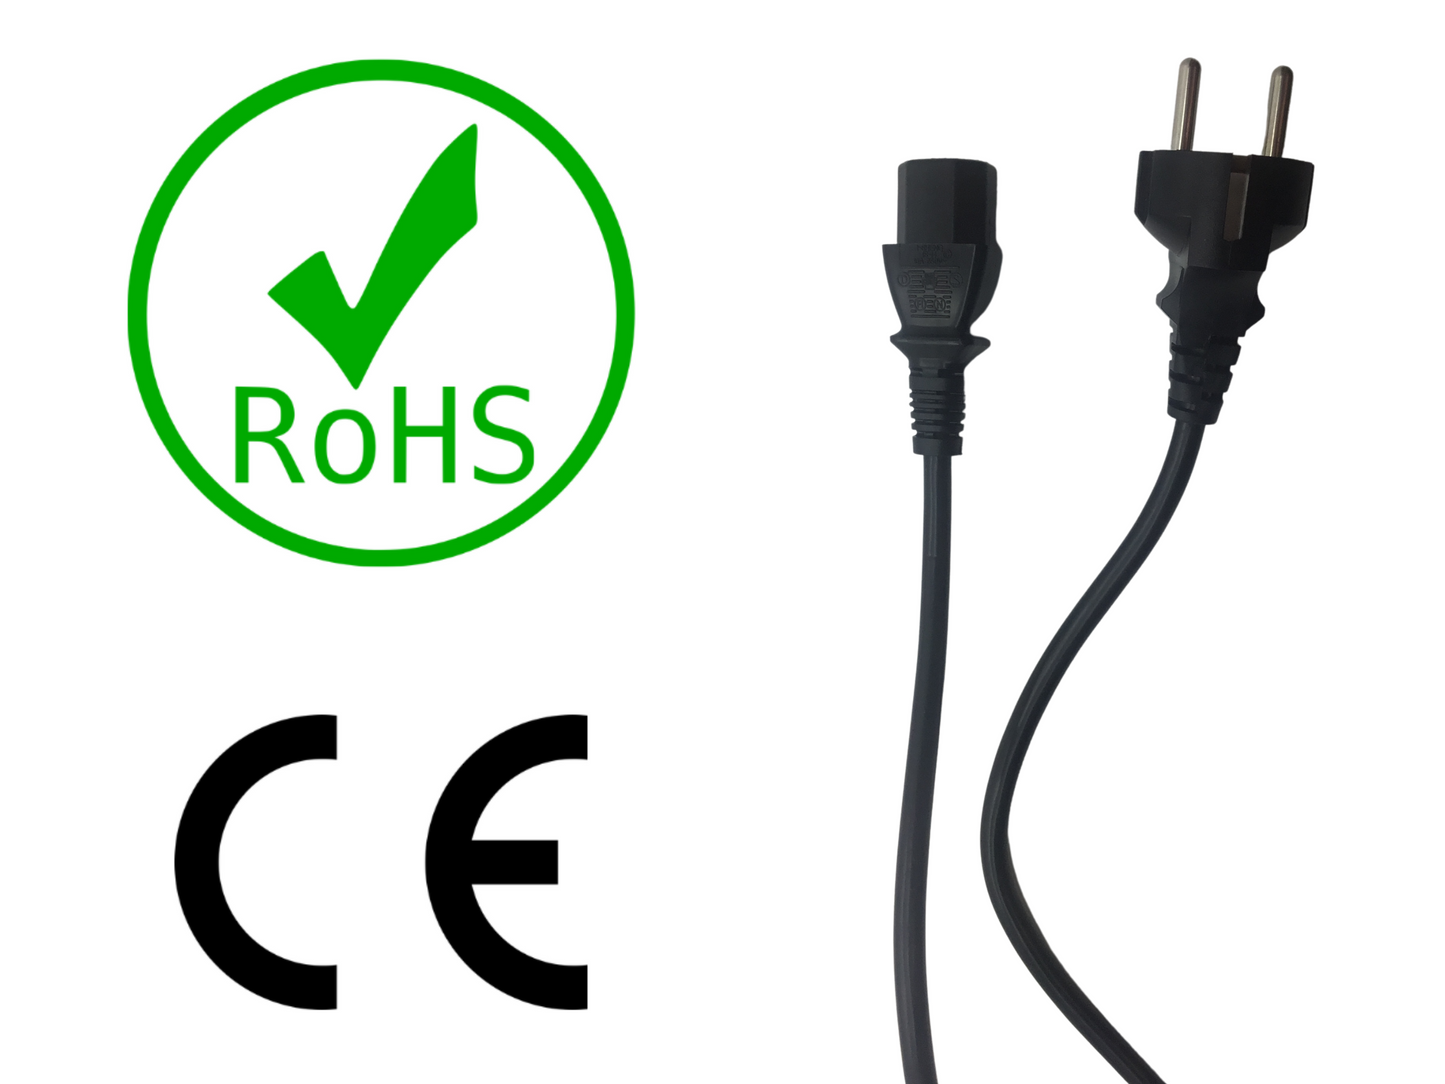 Schuko Straight Plug IEC C13 Straight Mains Lead - Black